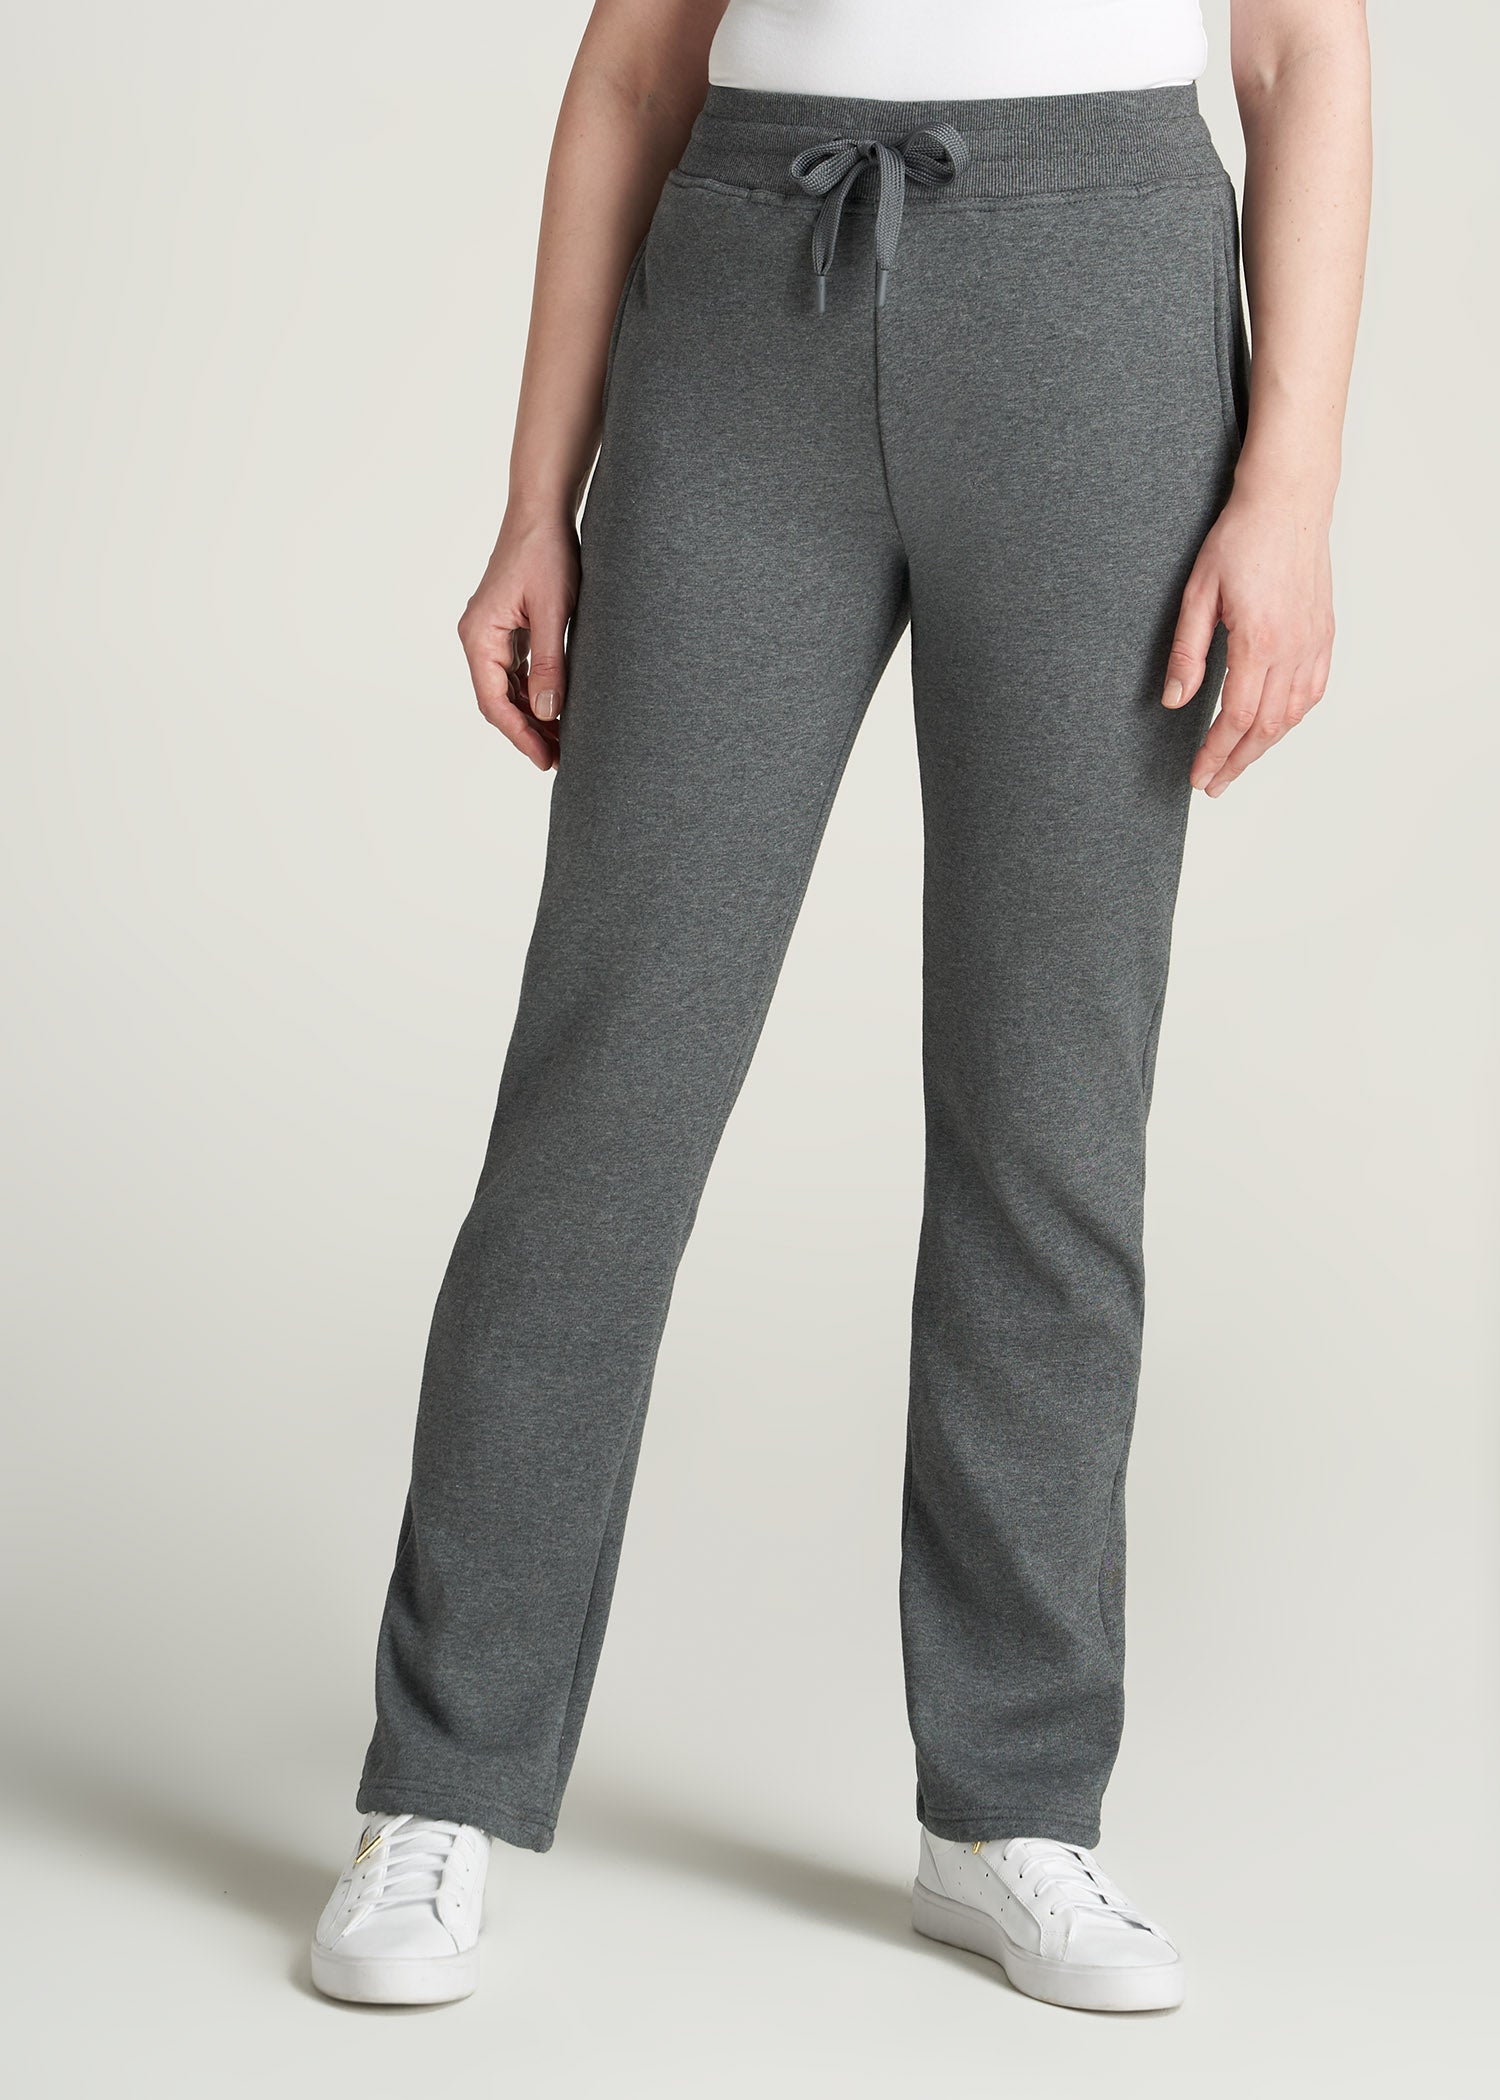        American-Tall-Women-WKND-Fleece-OpenBottom-Sweatpants-CharcoalMix-front